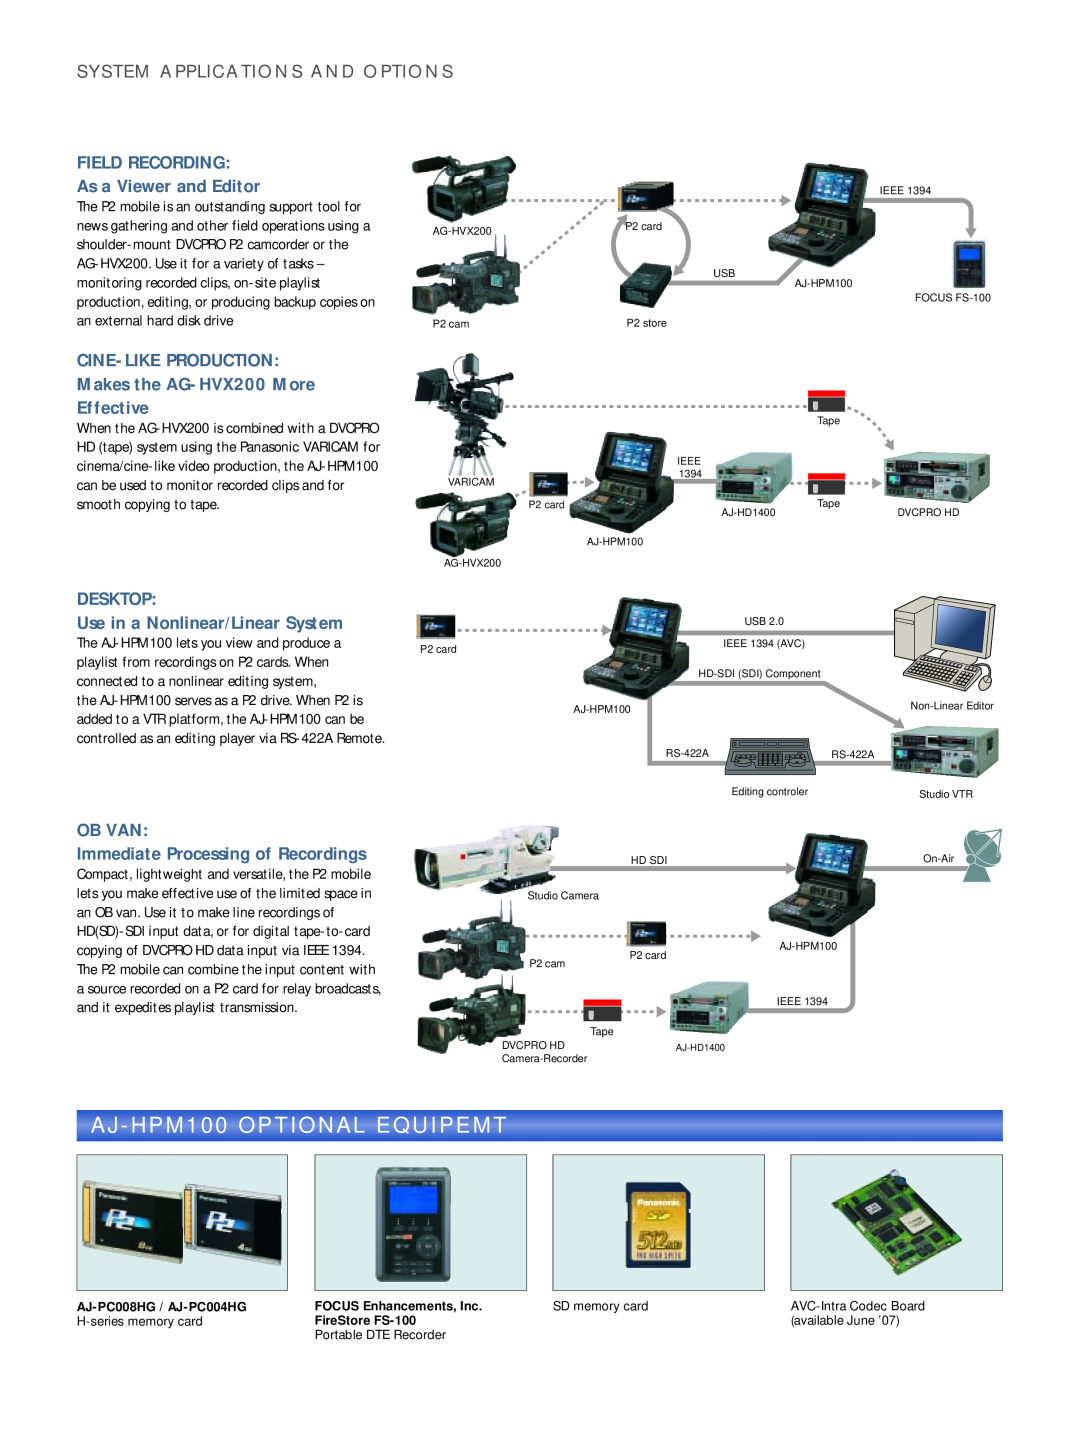 Panasonic AJ-HPM100E manual AJ - HPM100 OPTIONAL EQUIPEMT, FIELD RECORDING As a Viewer and Editor, Desktop 